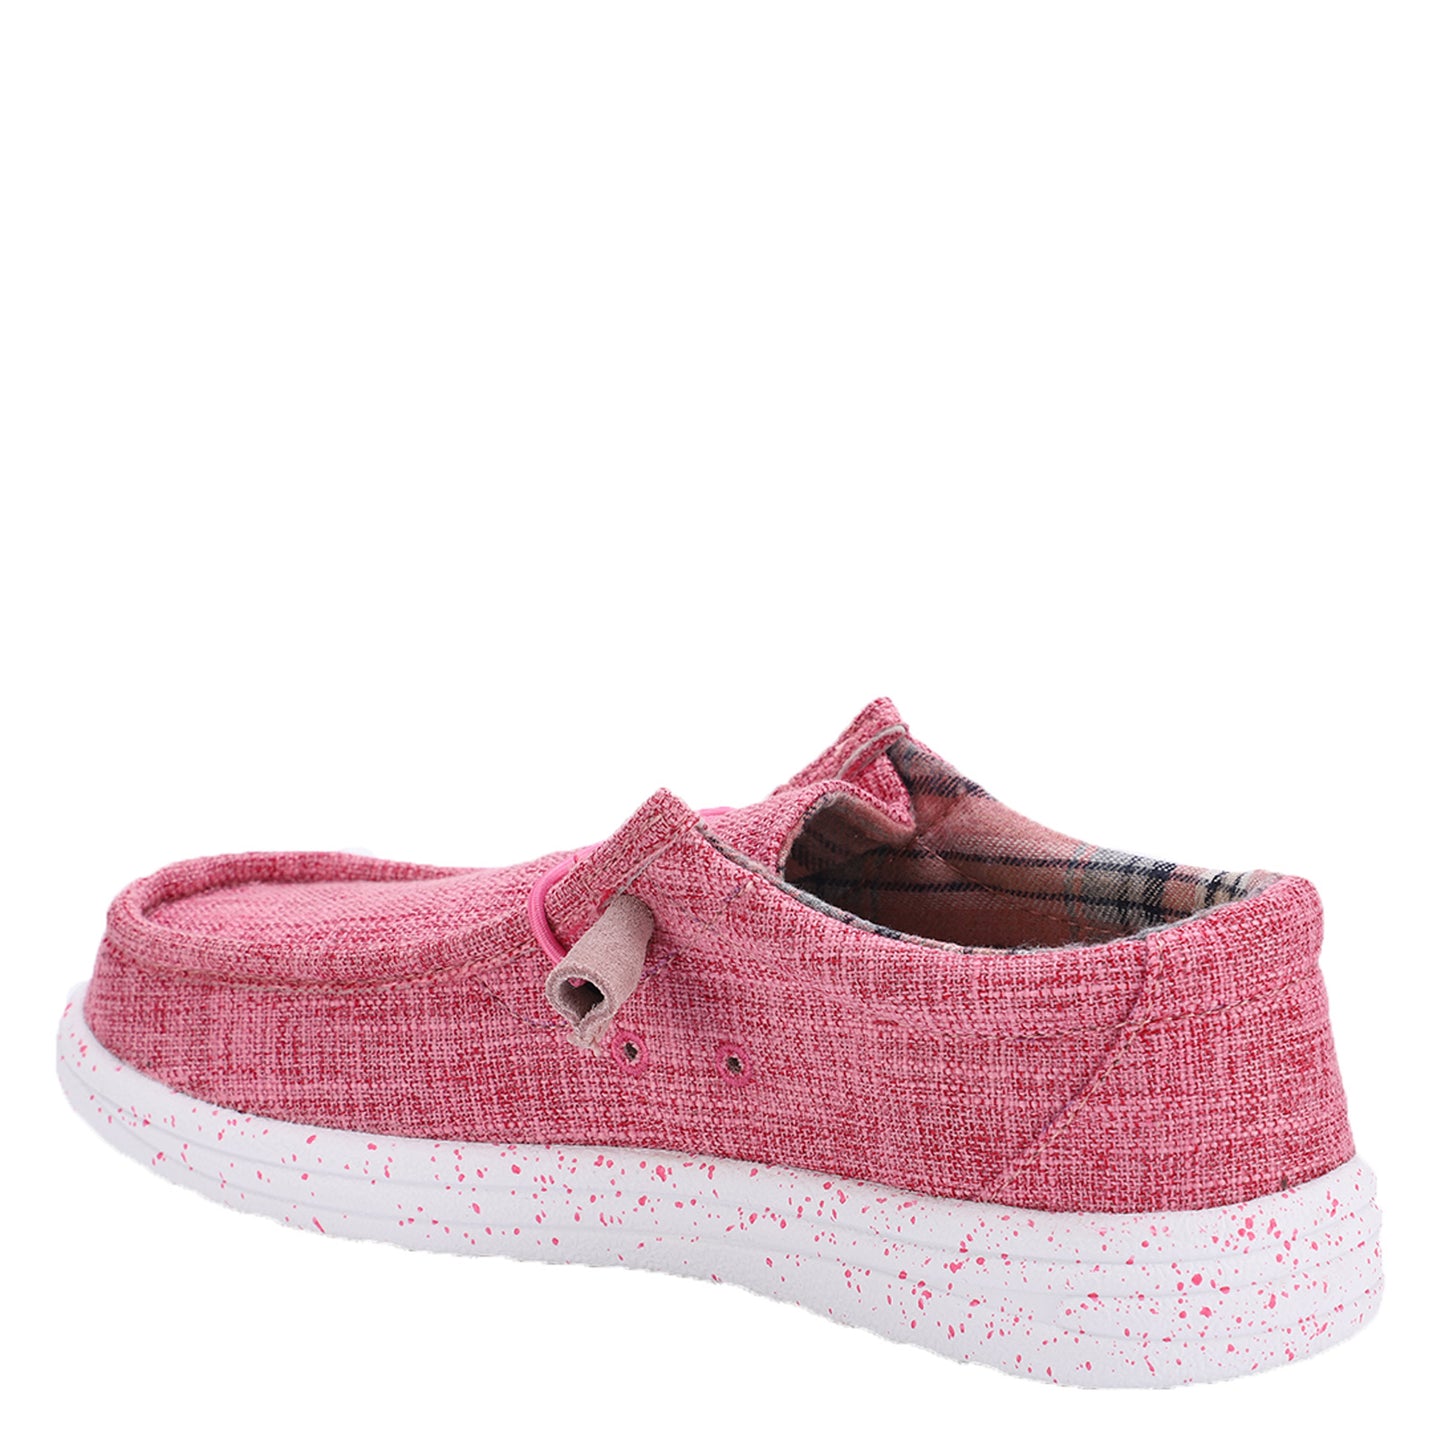 Peltz Shoes  Women's Lamo Paula Slip-On pink EW2035-PNK